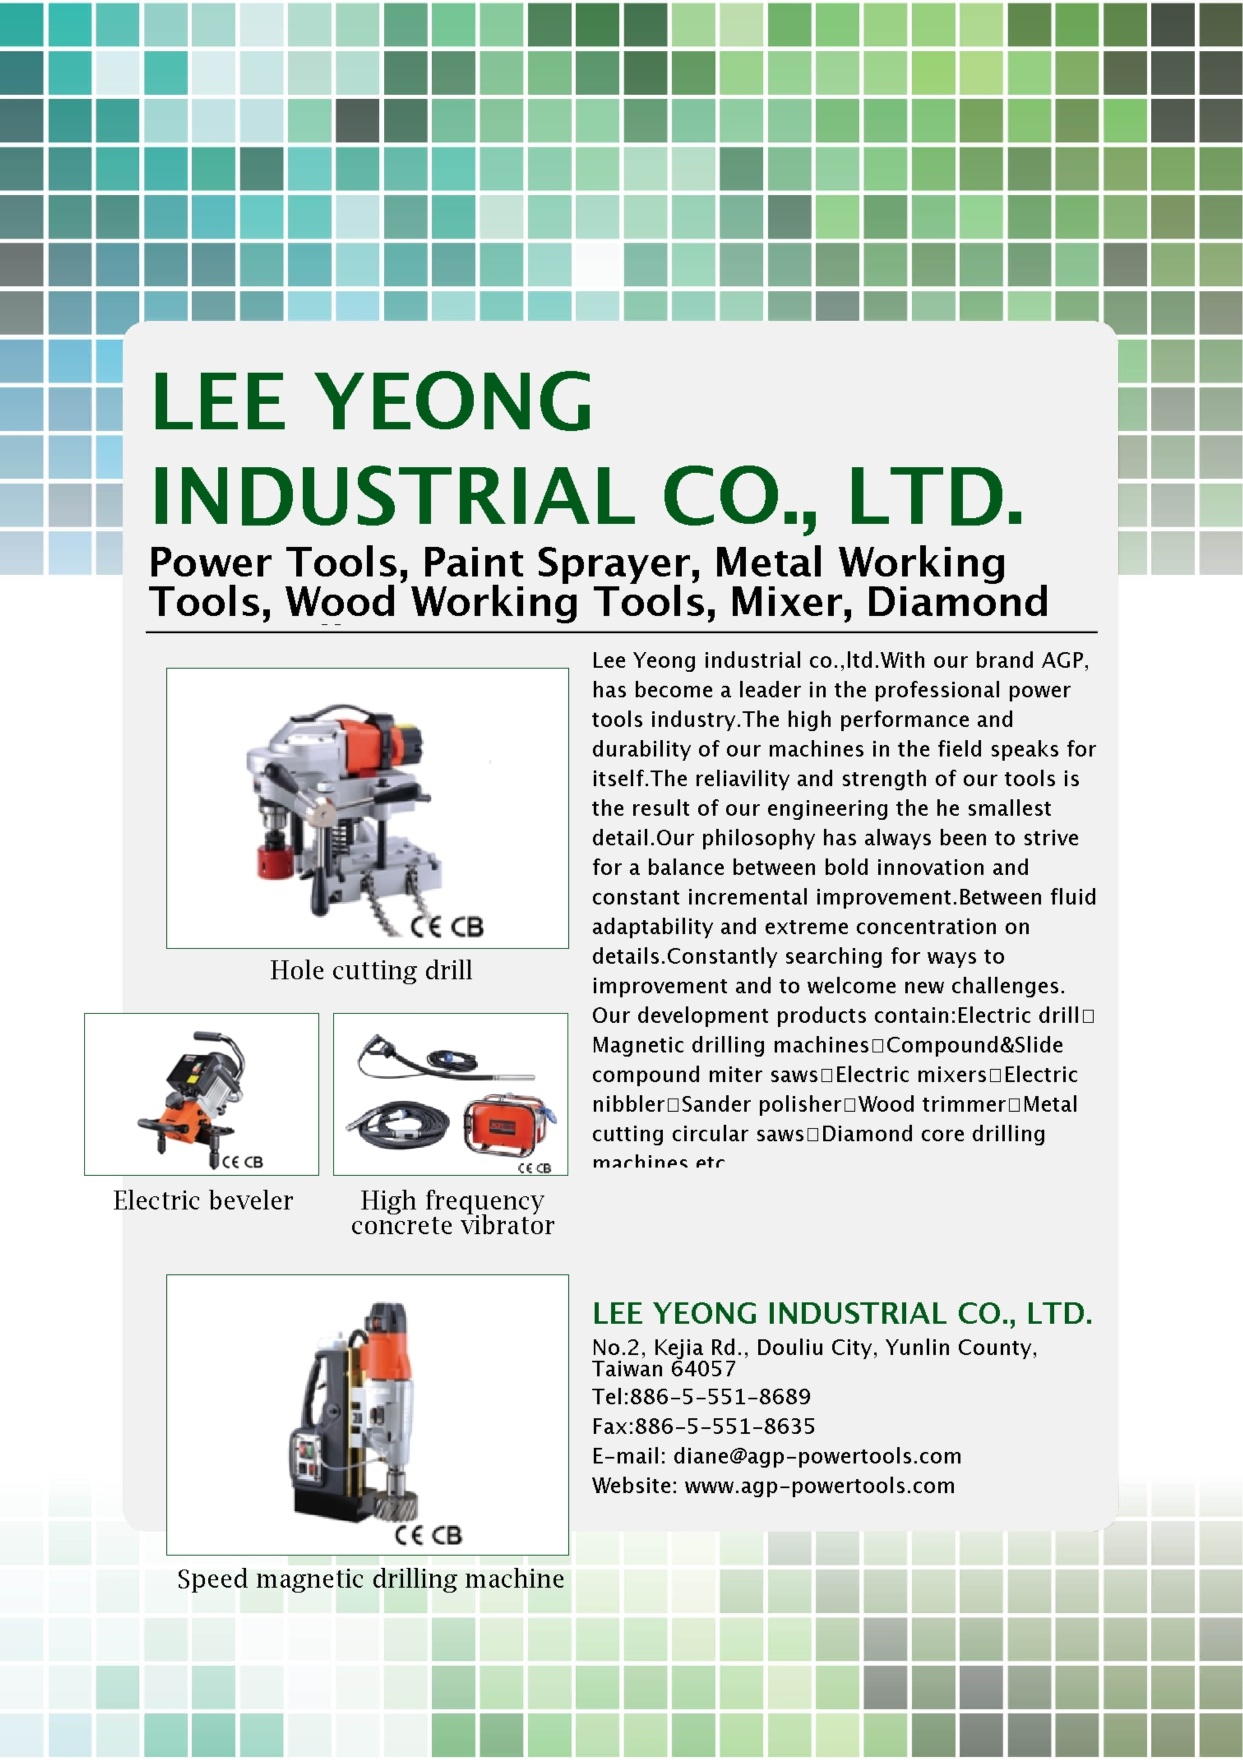 LEE YEONG INDUSTRIAL CO., LTD.